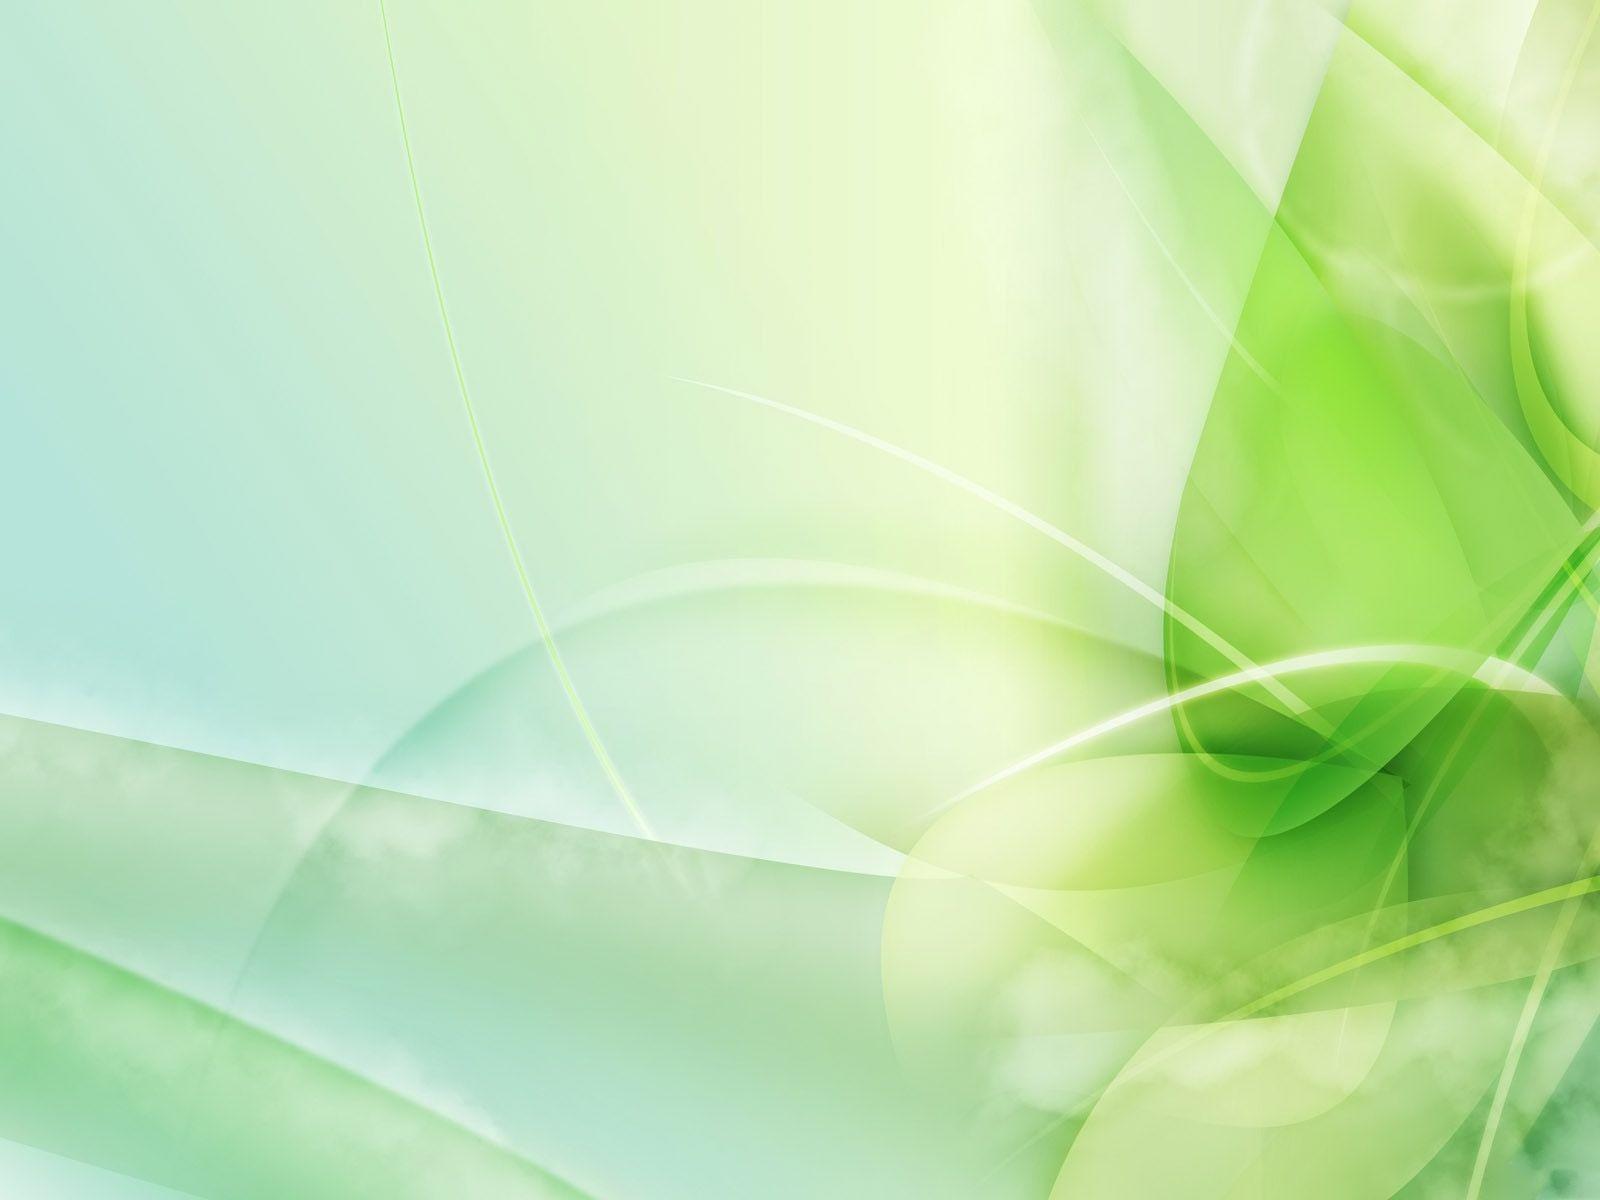 Image: Vista green theme Desktop Wallpaper. INLine